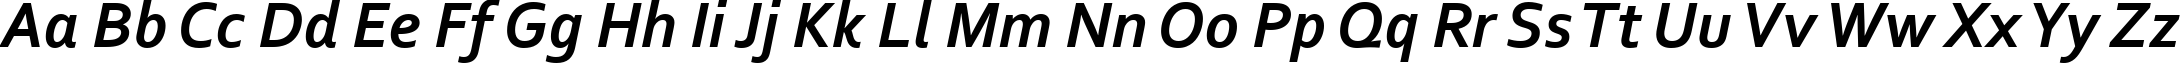 Пример написания английского алфавита шрифтом Corbel Bold Italic